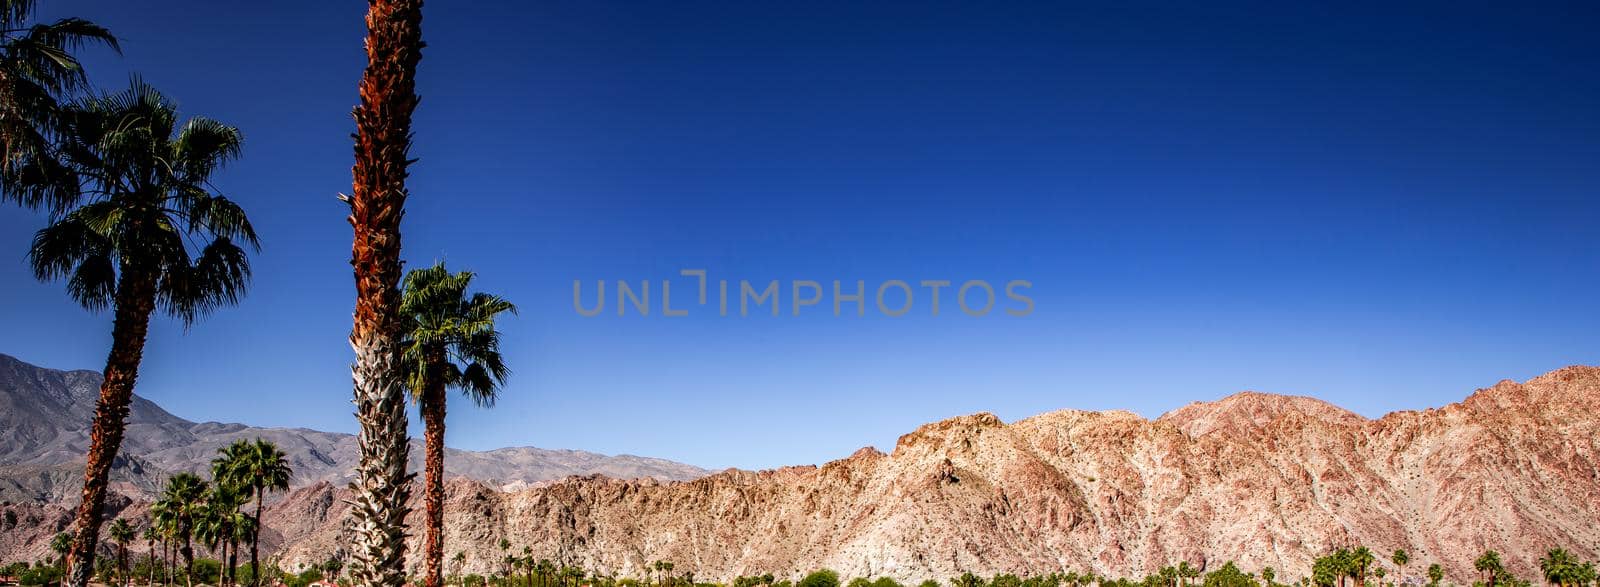 san jacinto mountain, palm springs, california by photogolfer